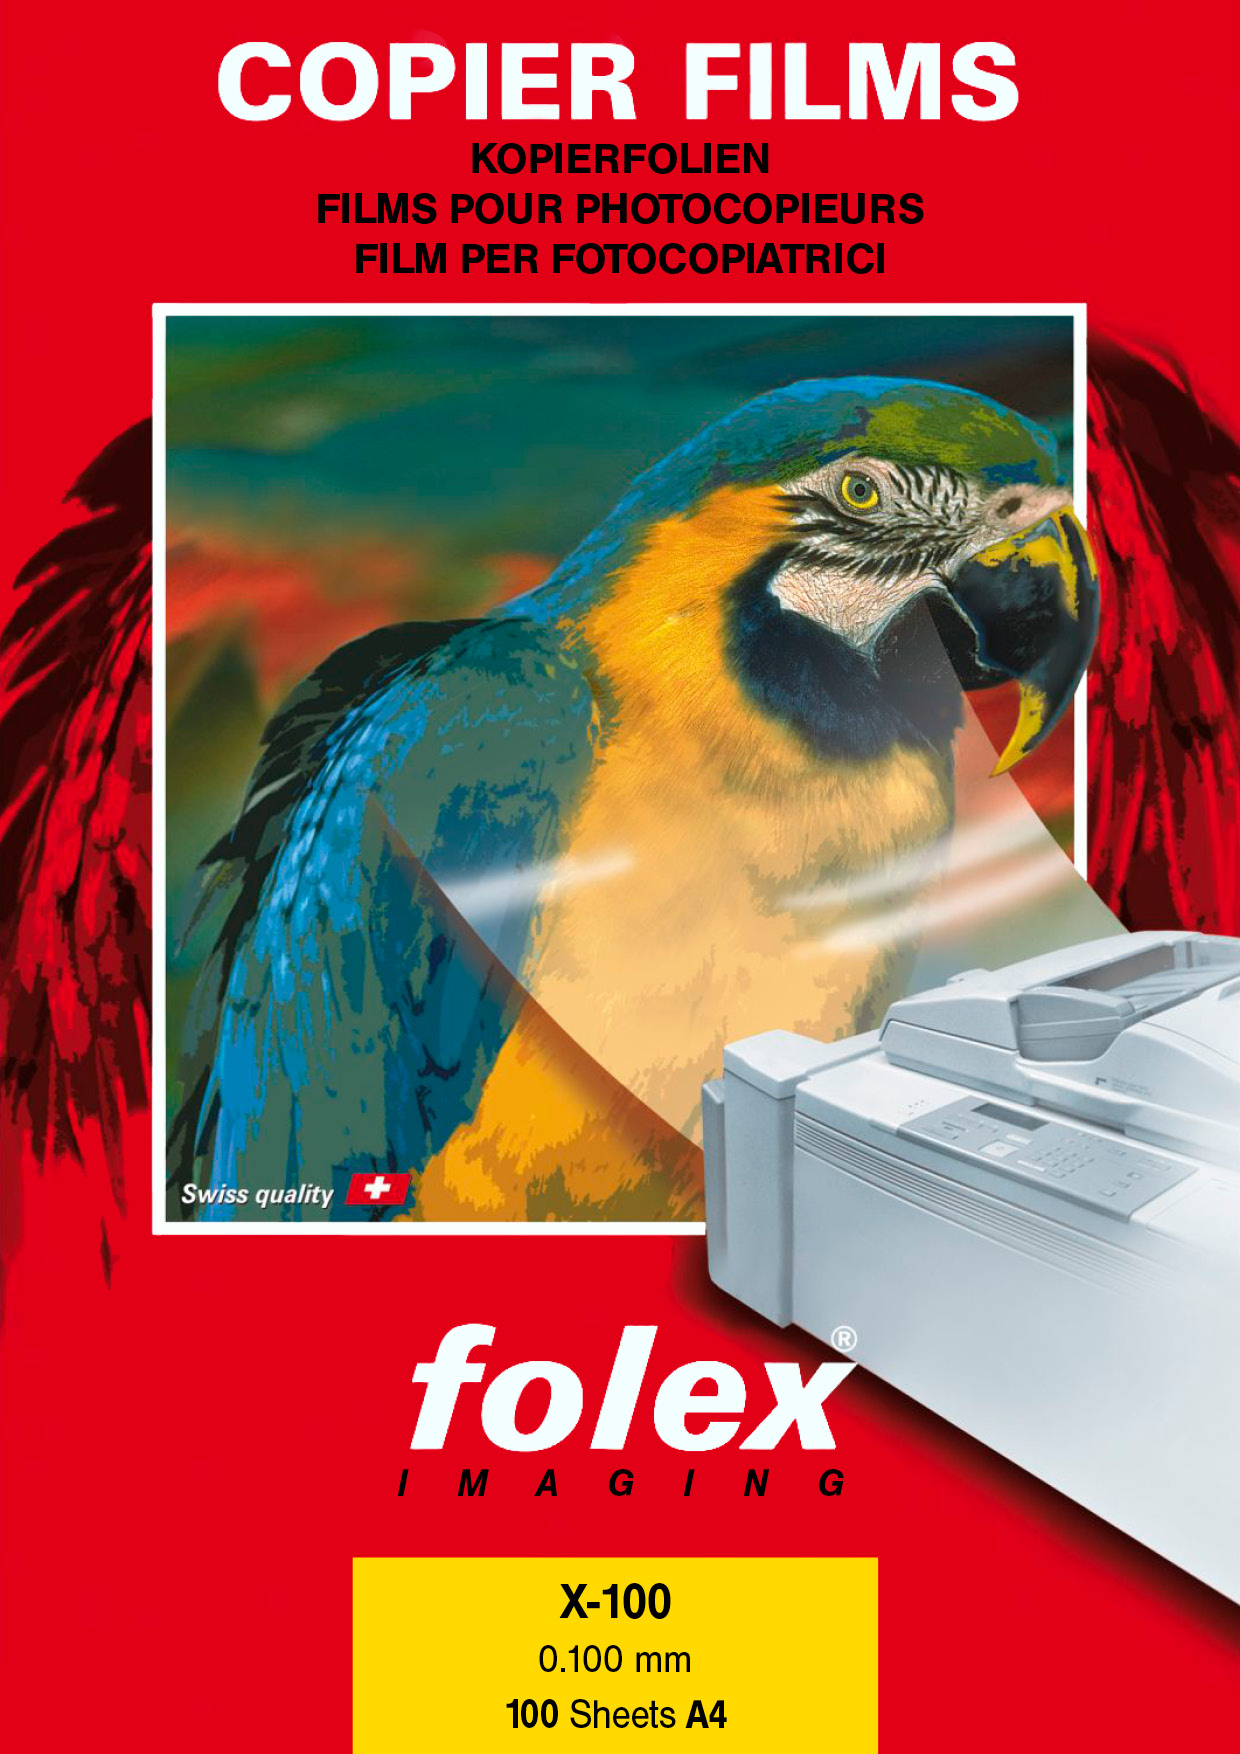 Kopierfolie Folex X 520 Karton mit 100 Blatt, 0,10 mm